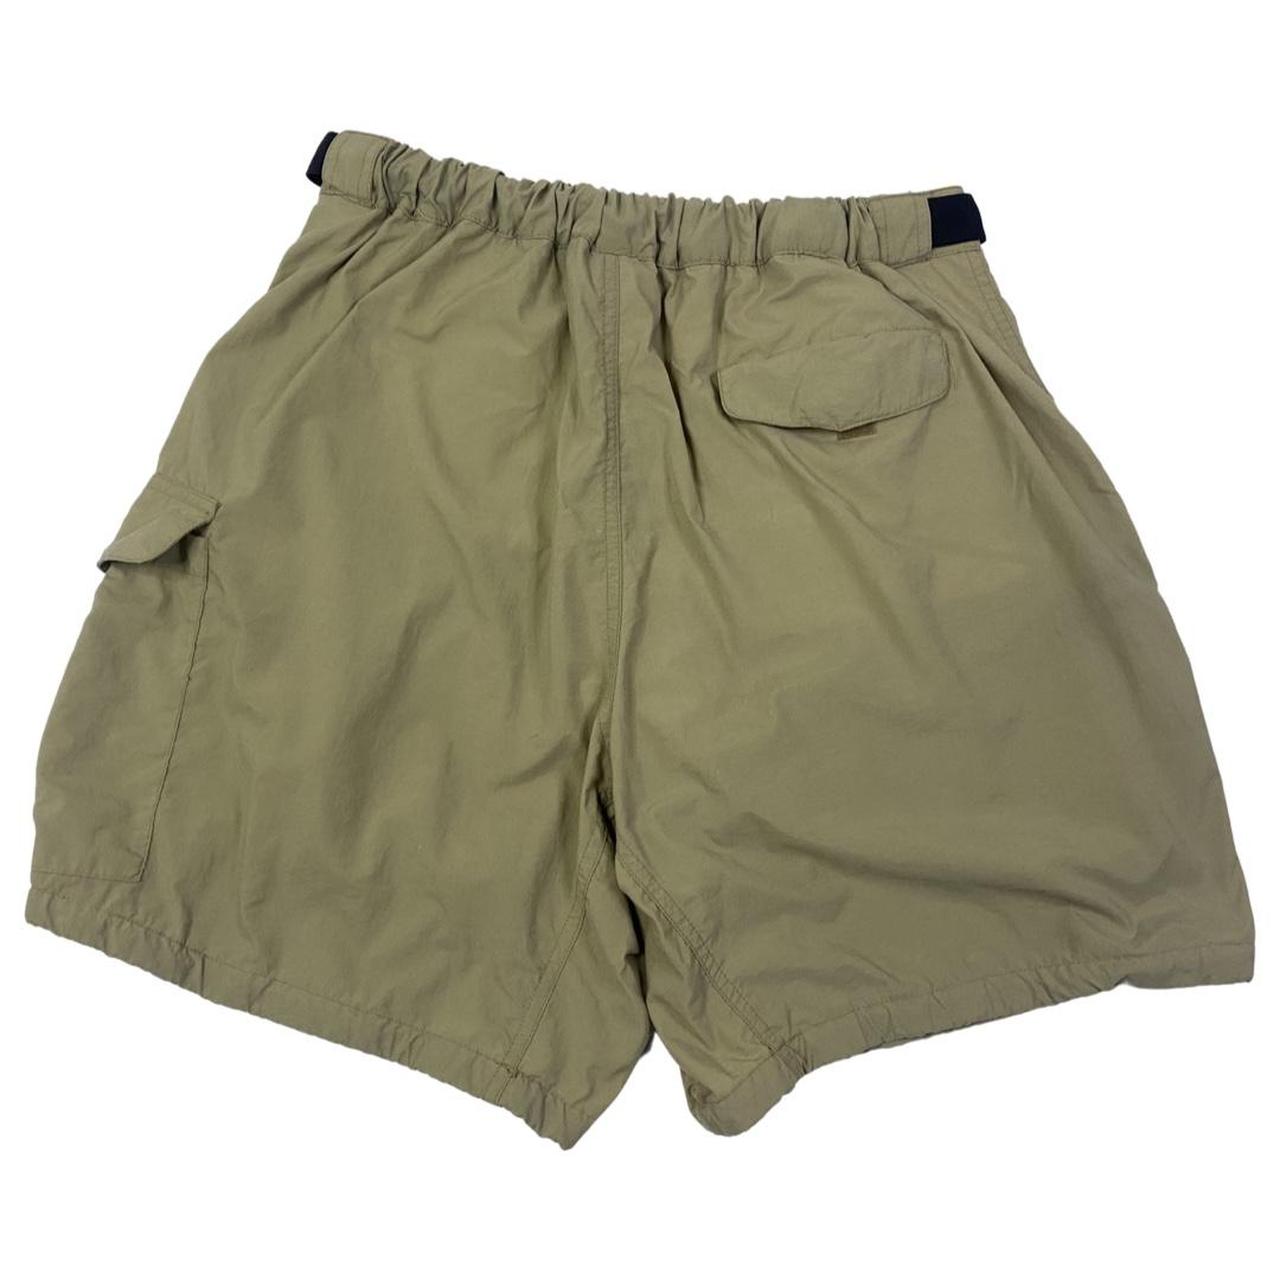 ExOfficio Men's Cream and Tan Shorts (2)